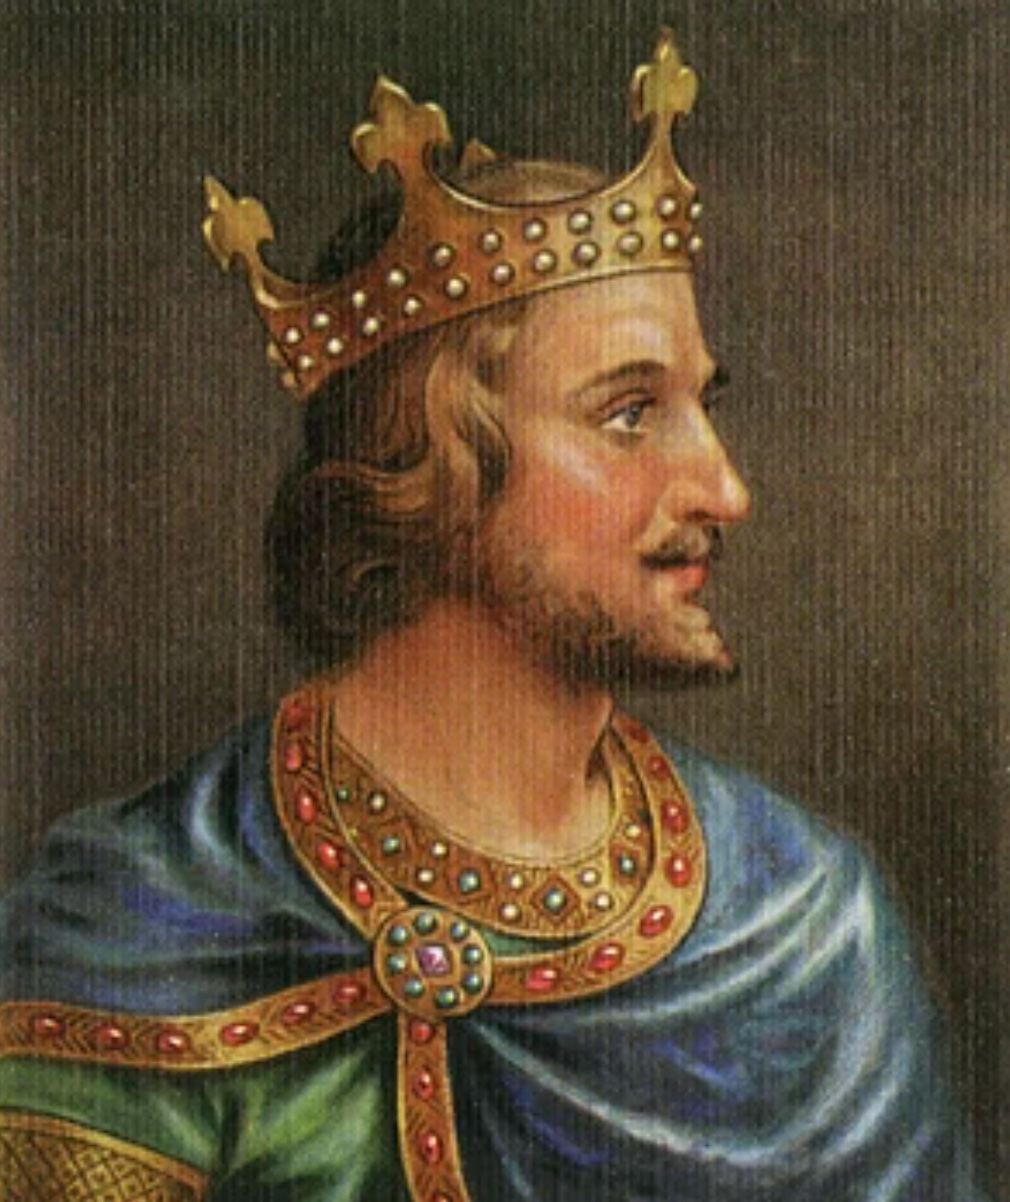 English Royalty - Stephen of Blois, King of England